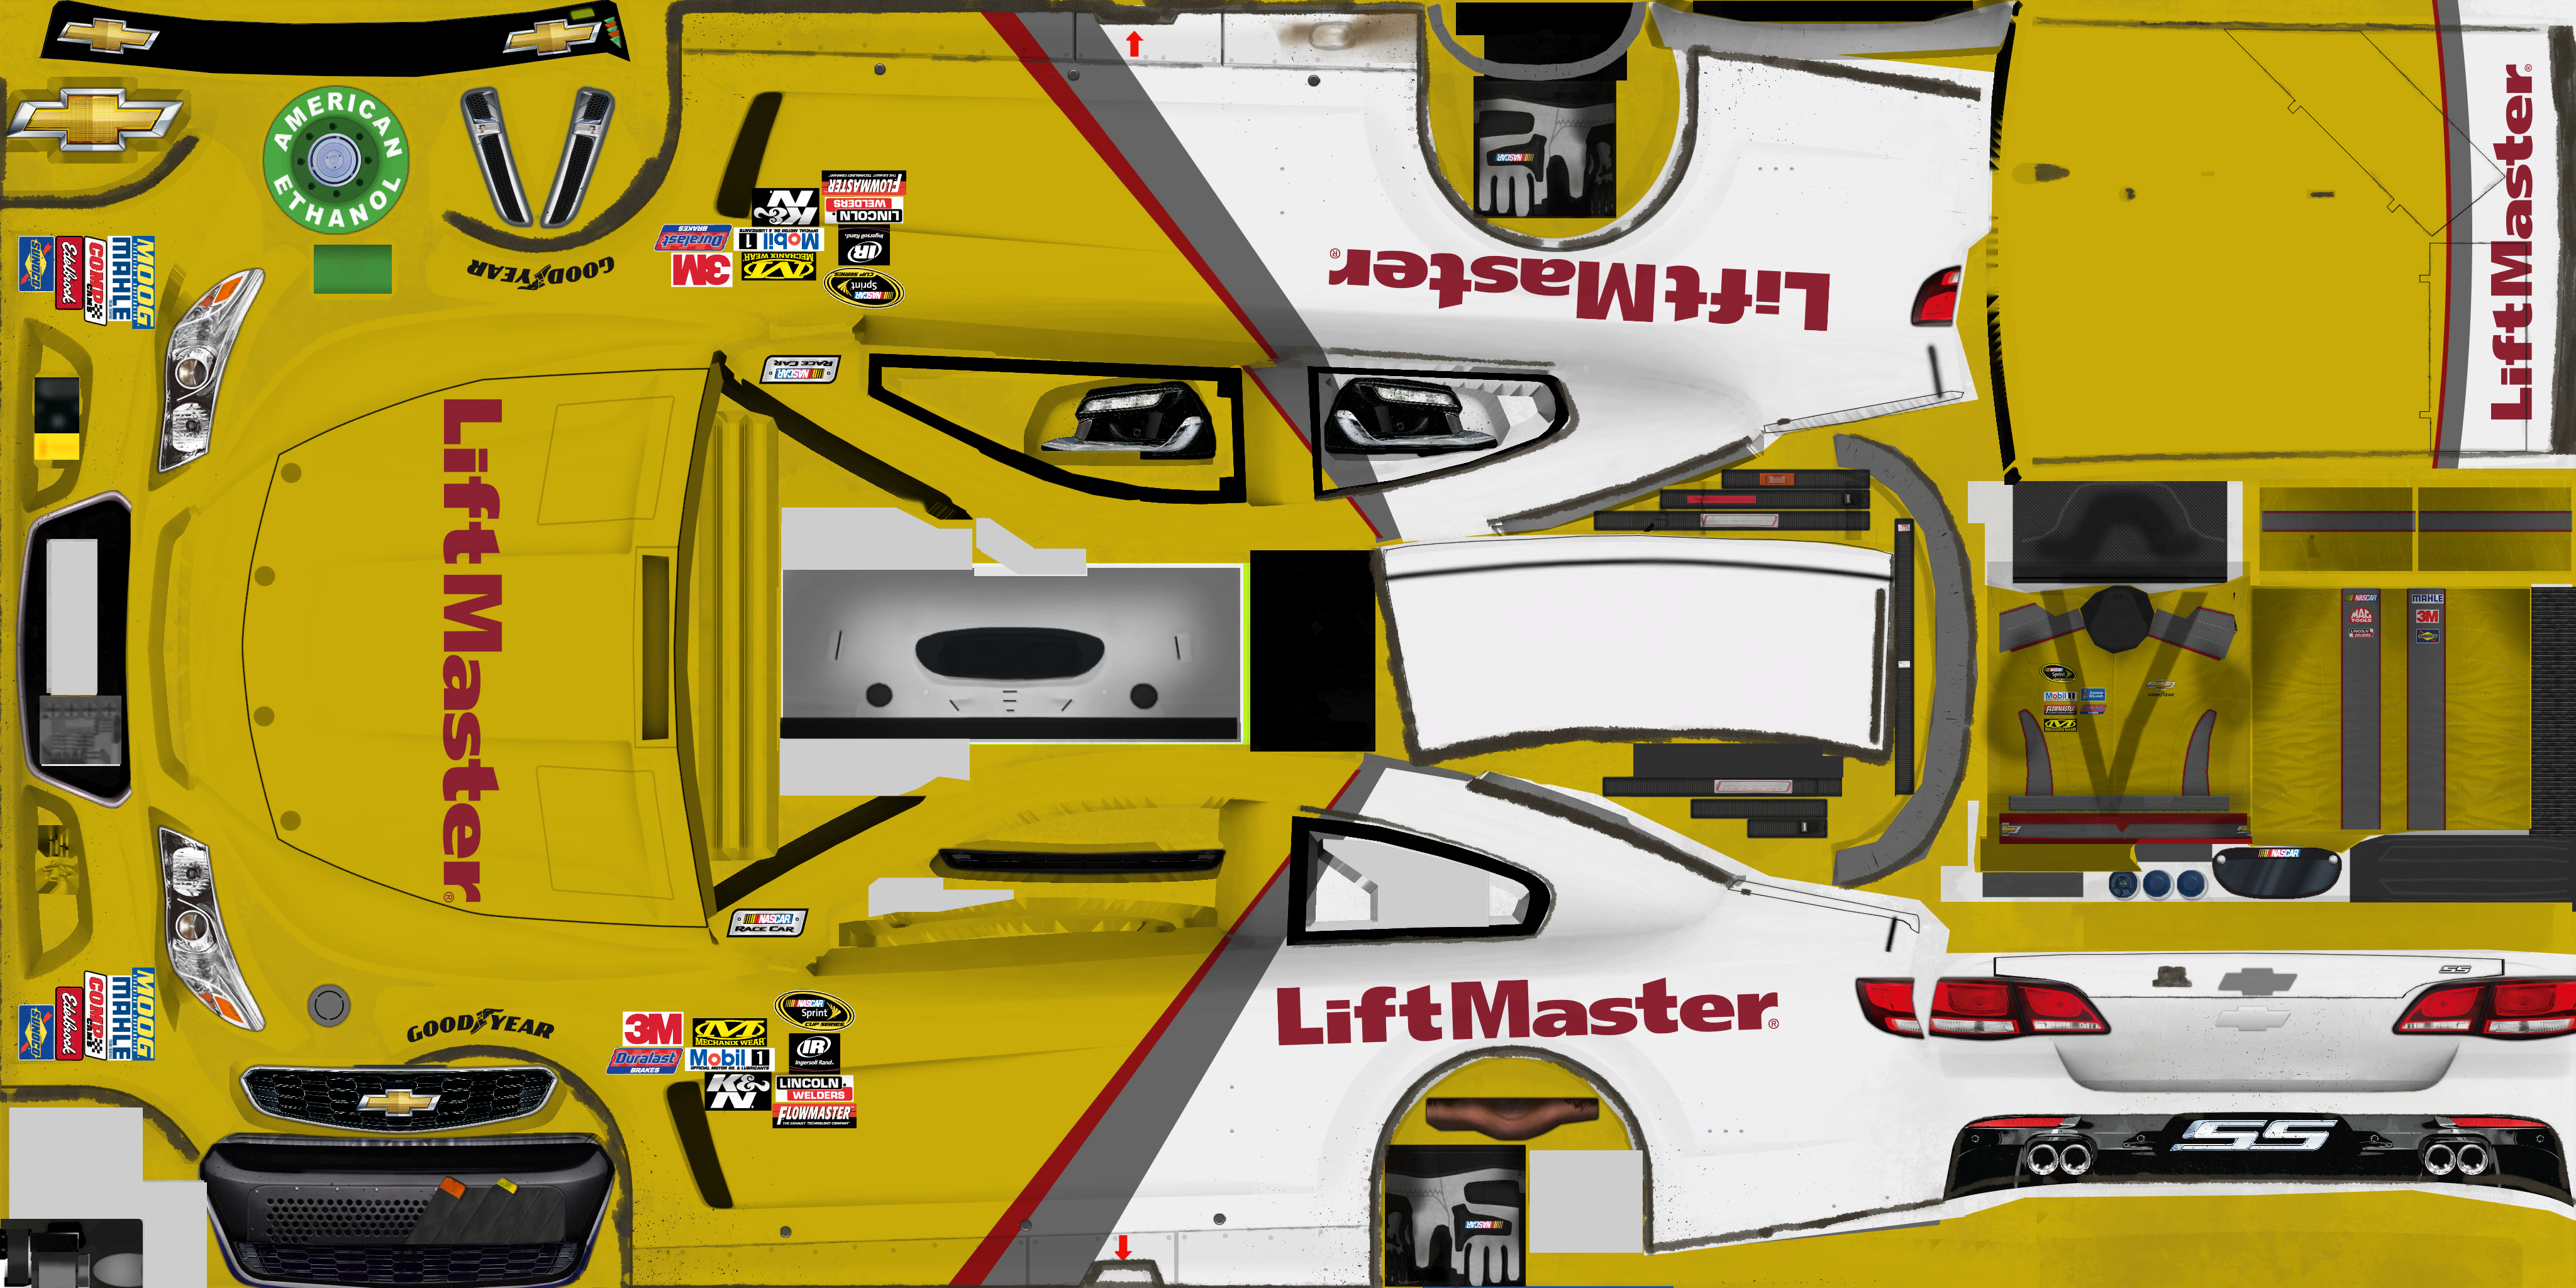 NASCAR Heat Evolution - Contract 4: LiftMaster Chevrolet